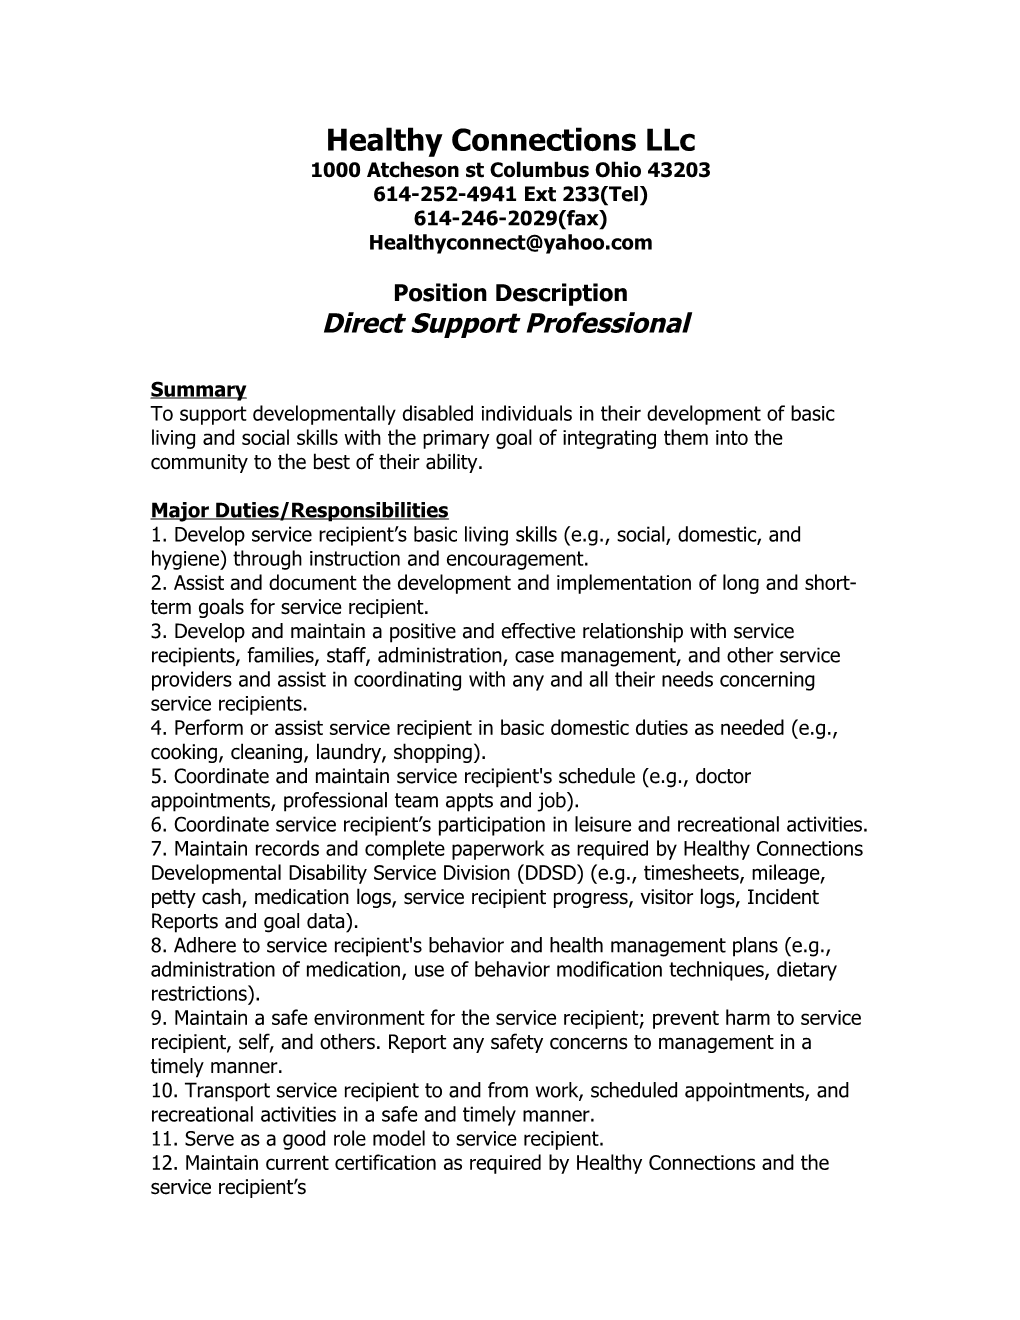 Direct Support Professional Job Description